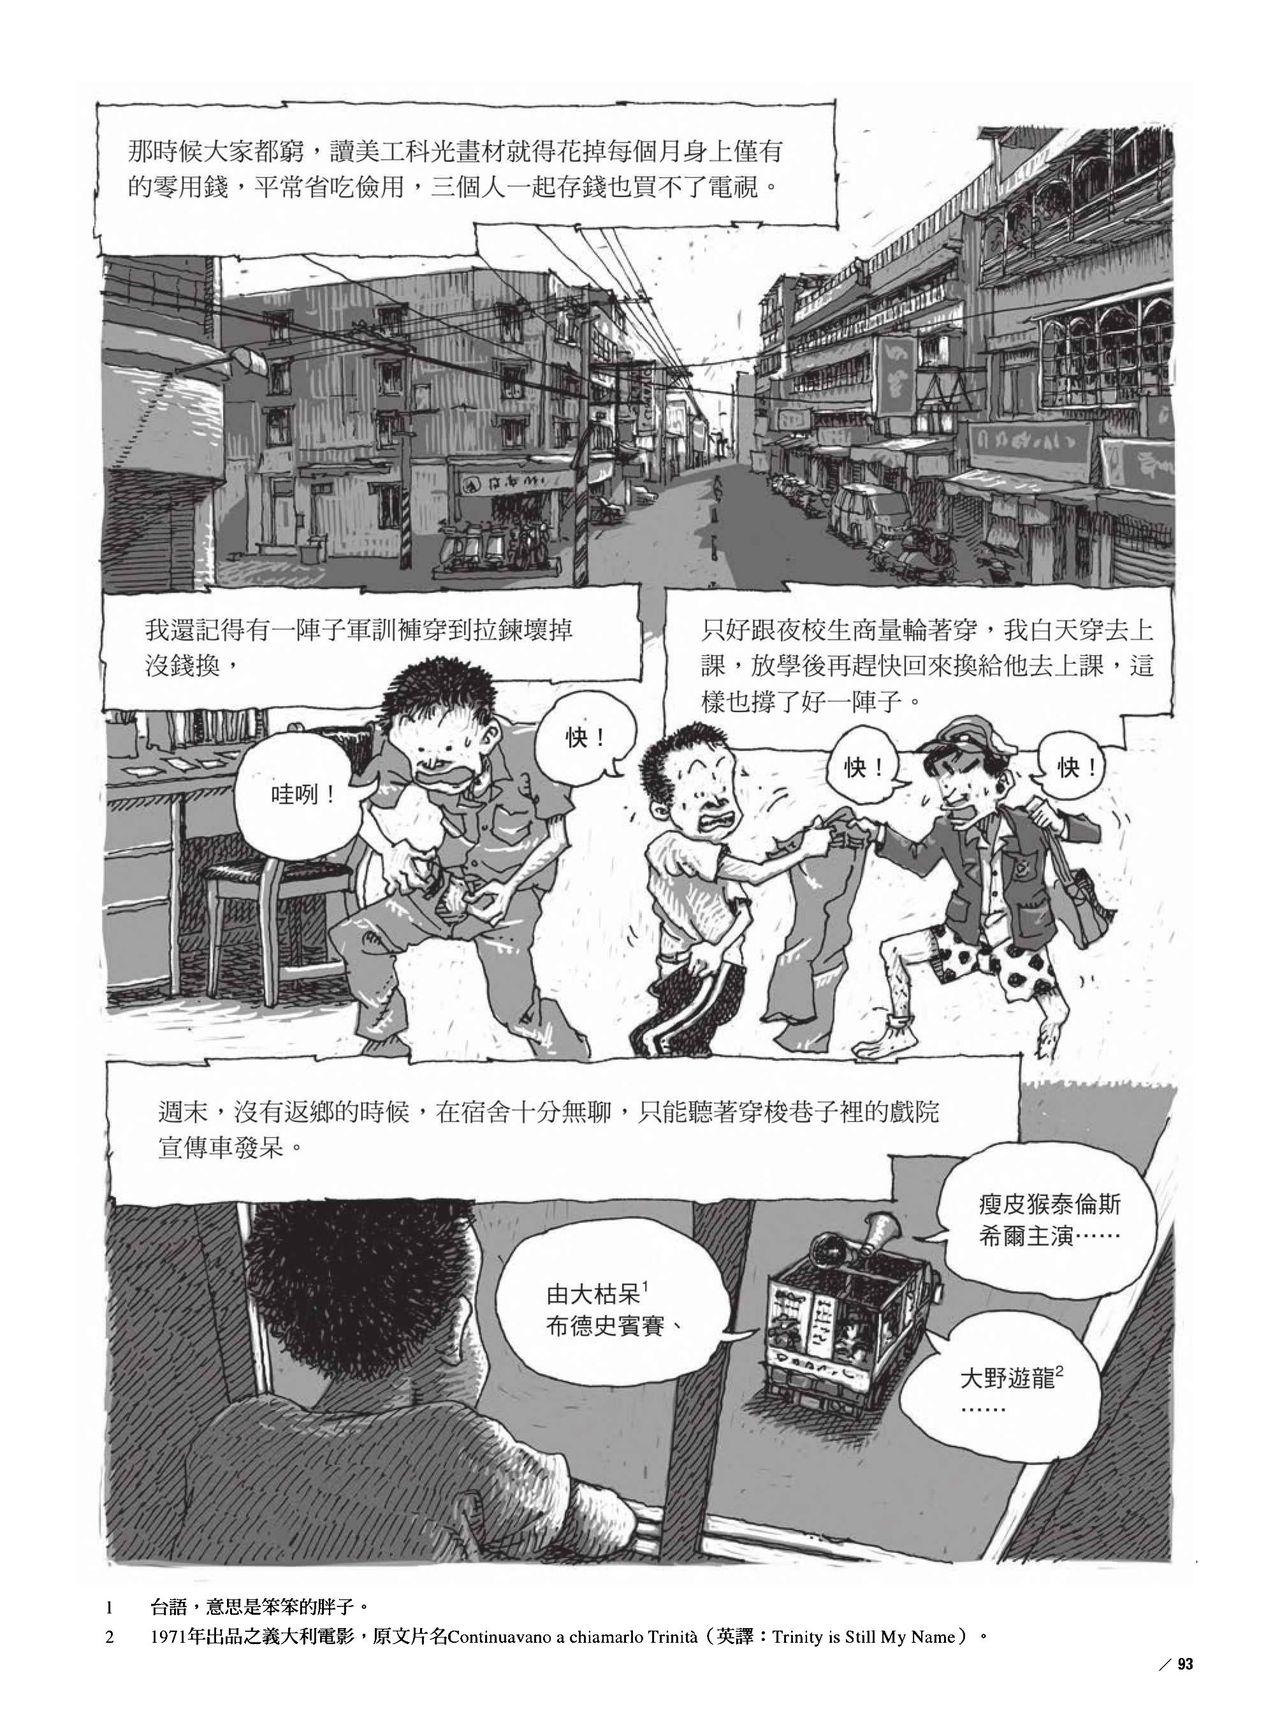 [Sean Chuang] 80’S Diary in Taiwan 2 93